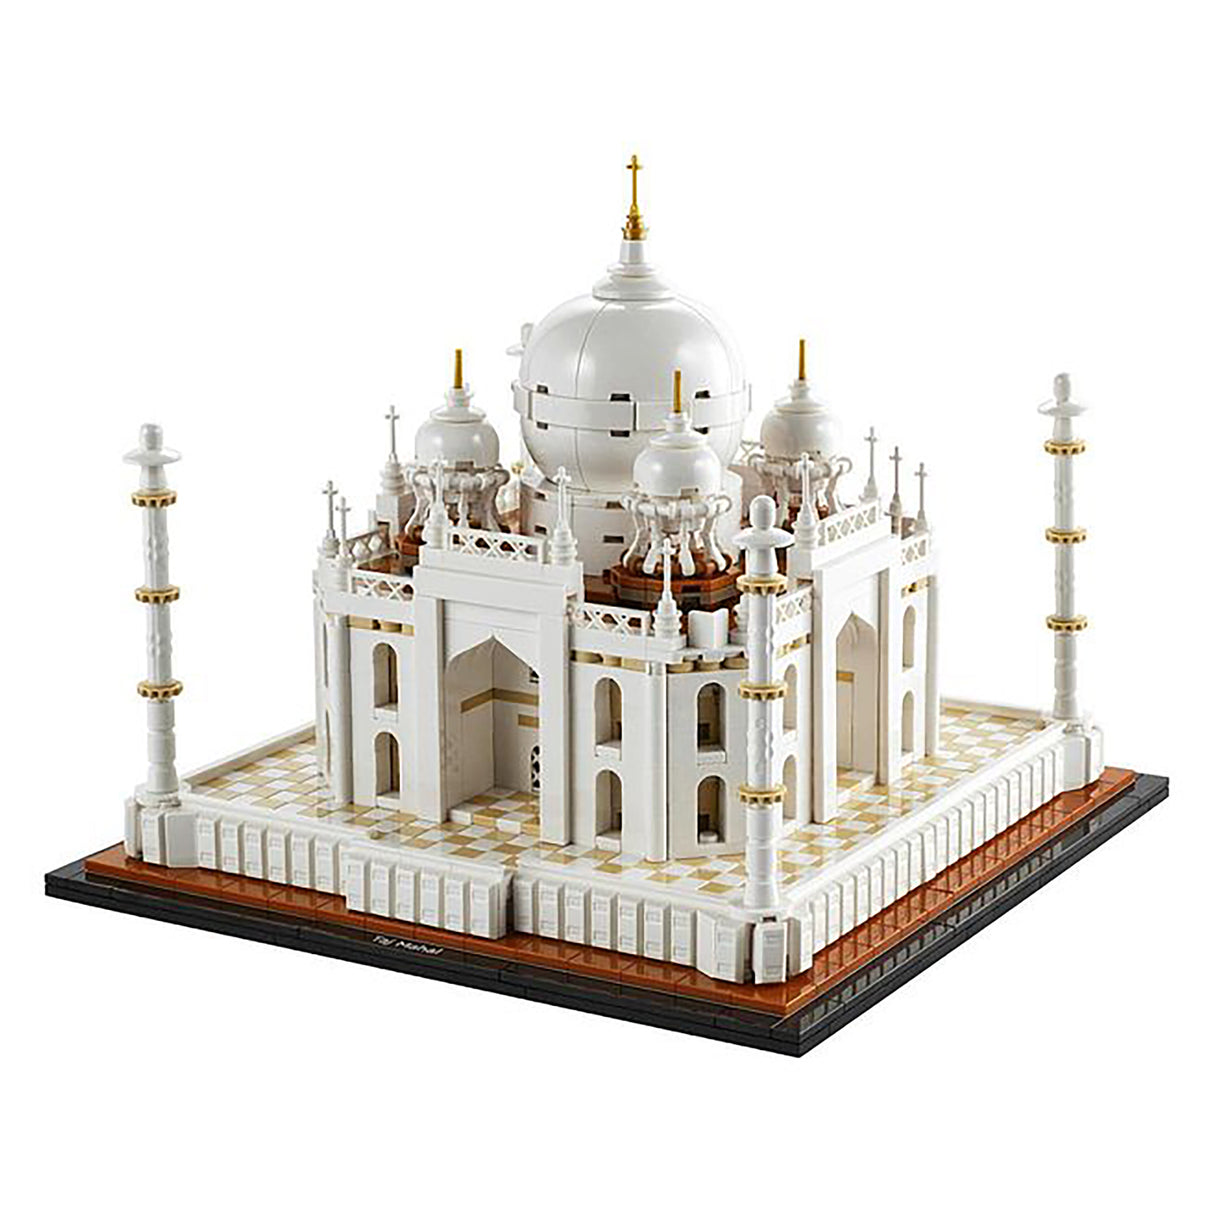 LEGO Architecture Taj Mahal 21056 (2,022 pieces)